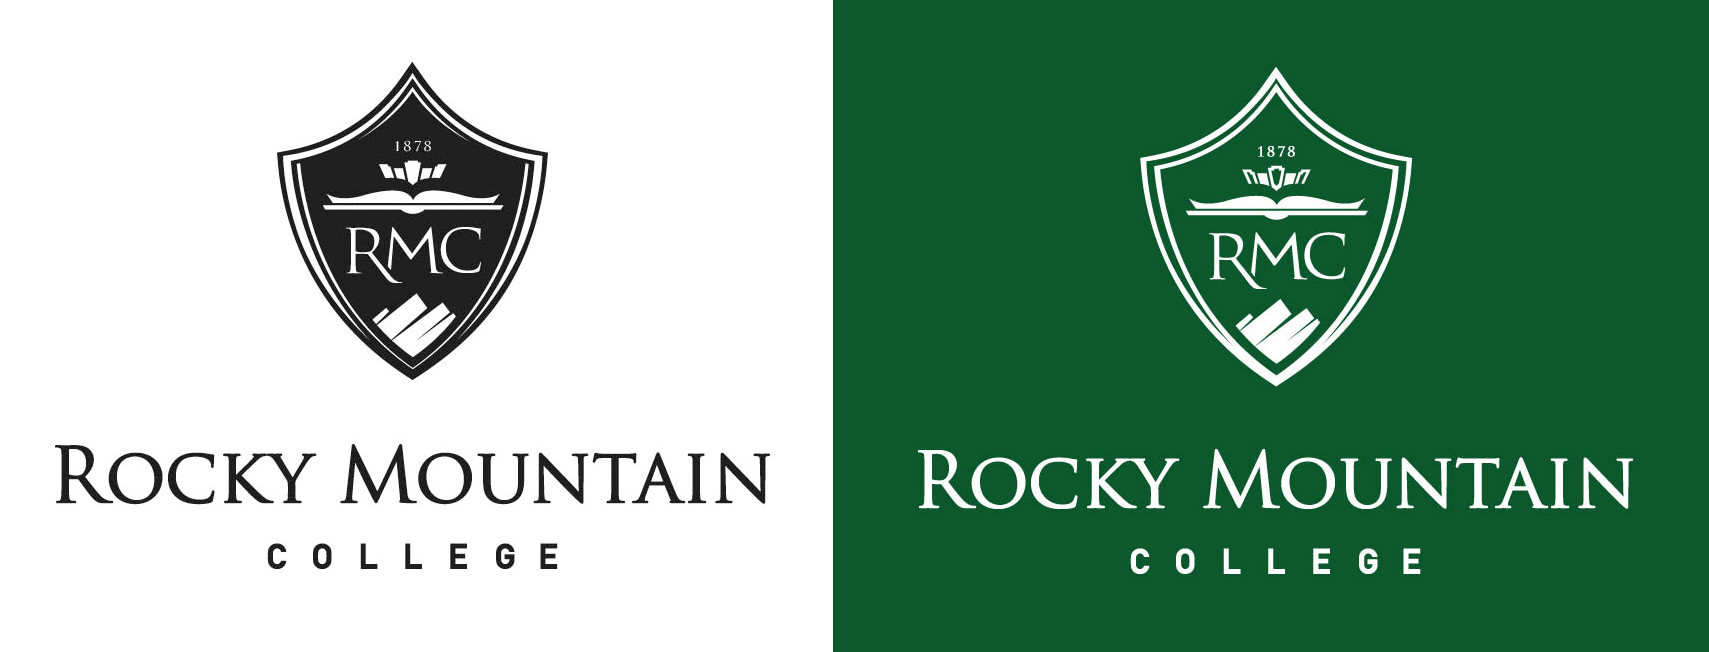 Original Mountain Logo - color it OK to alter the original logo on dark background or